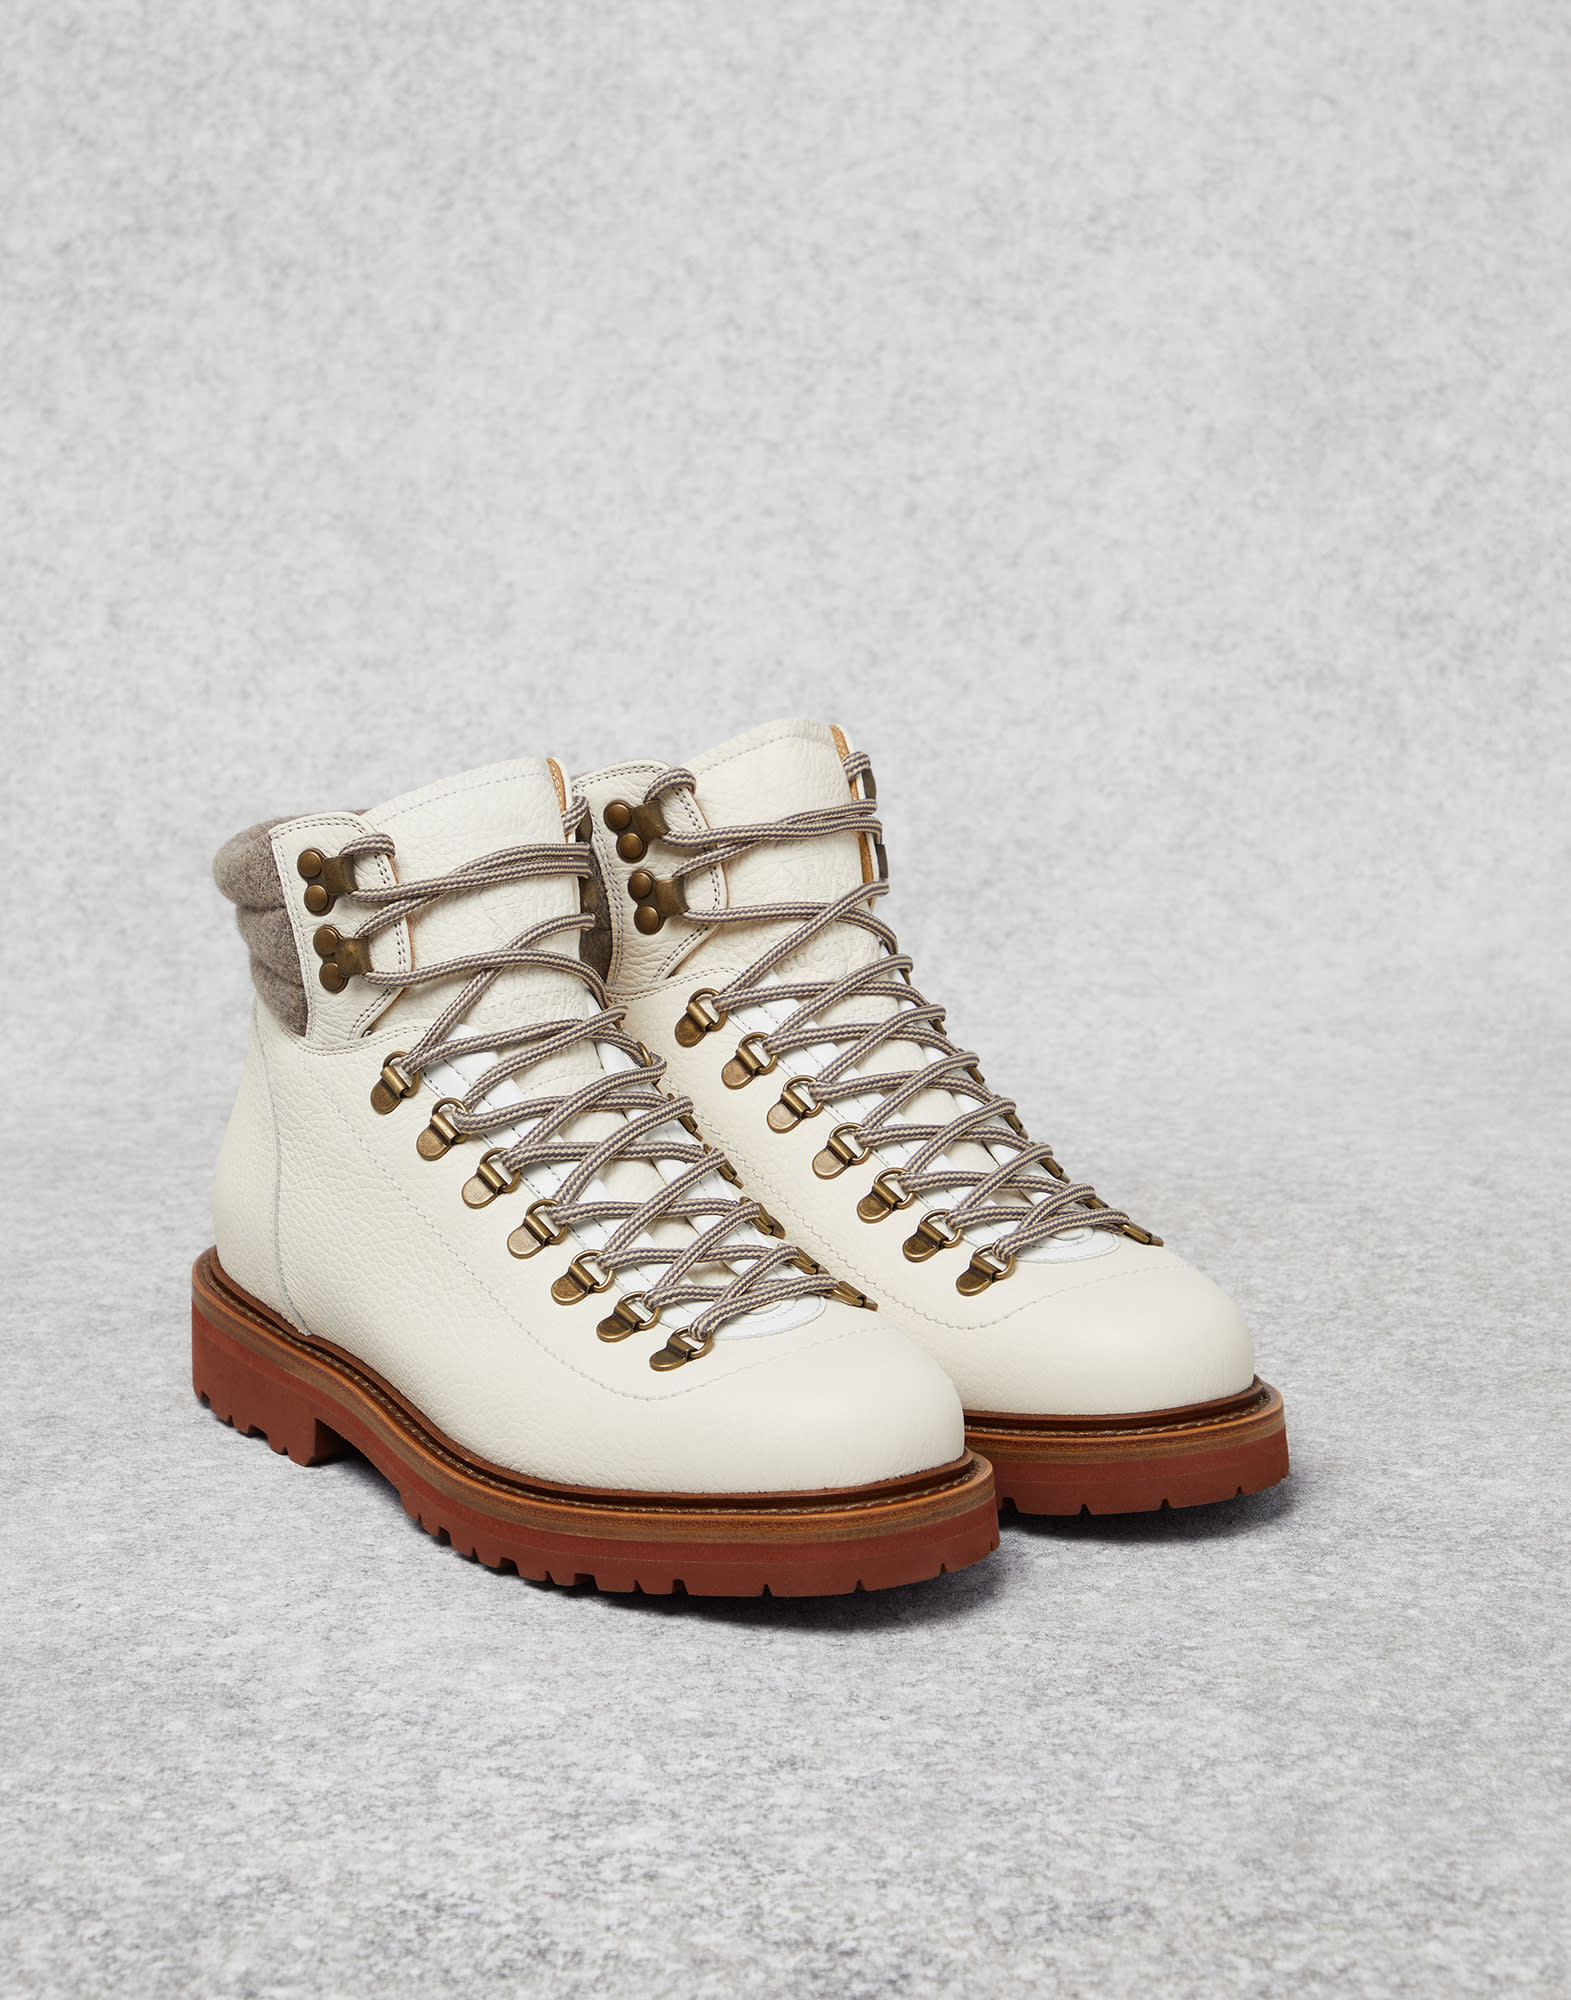 Mountain-style boot Off-White Man - Brunello Cucinelli